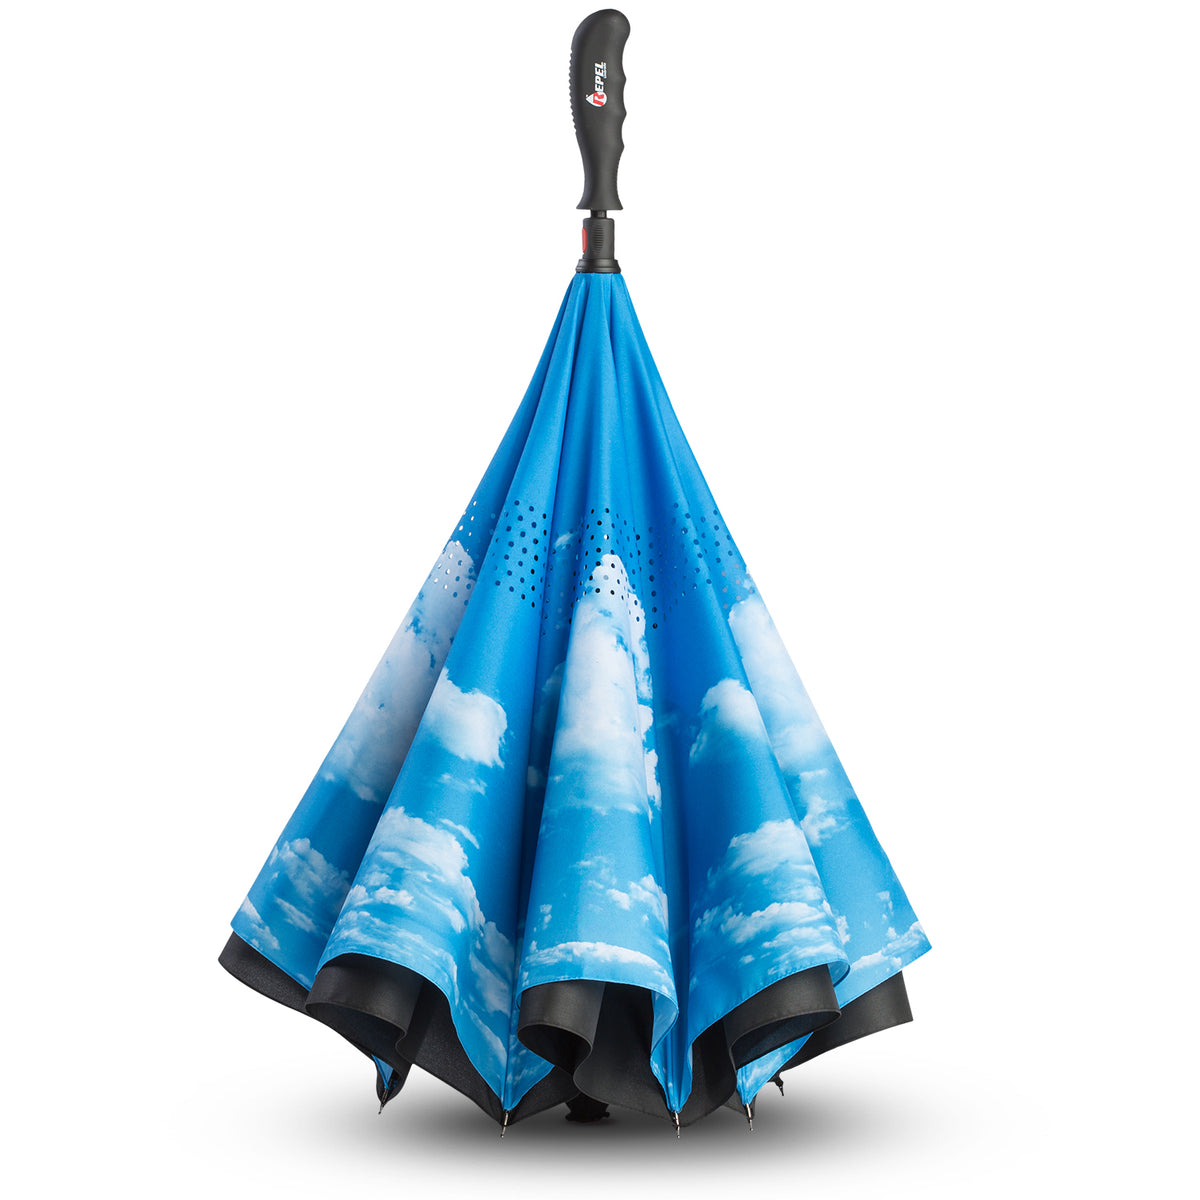 Reverse Folding Umbrella - Blue Sky